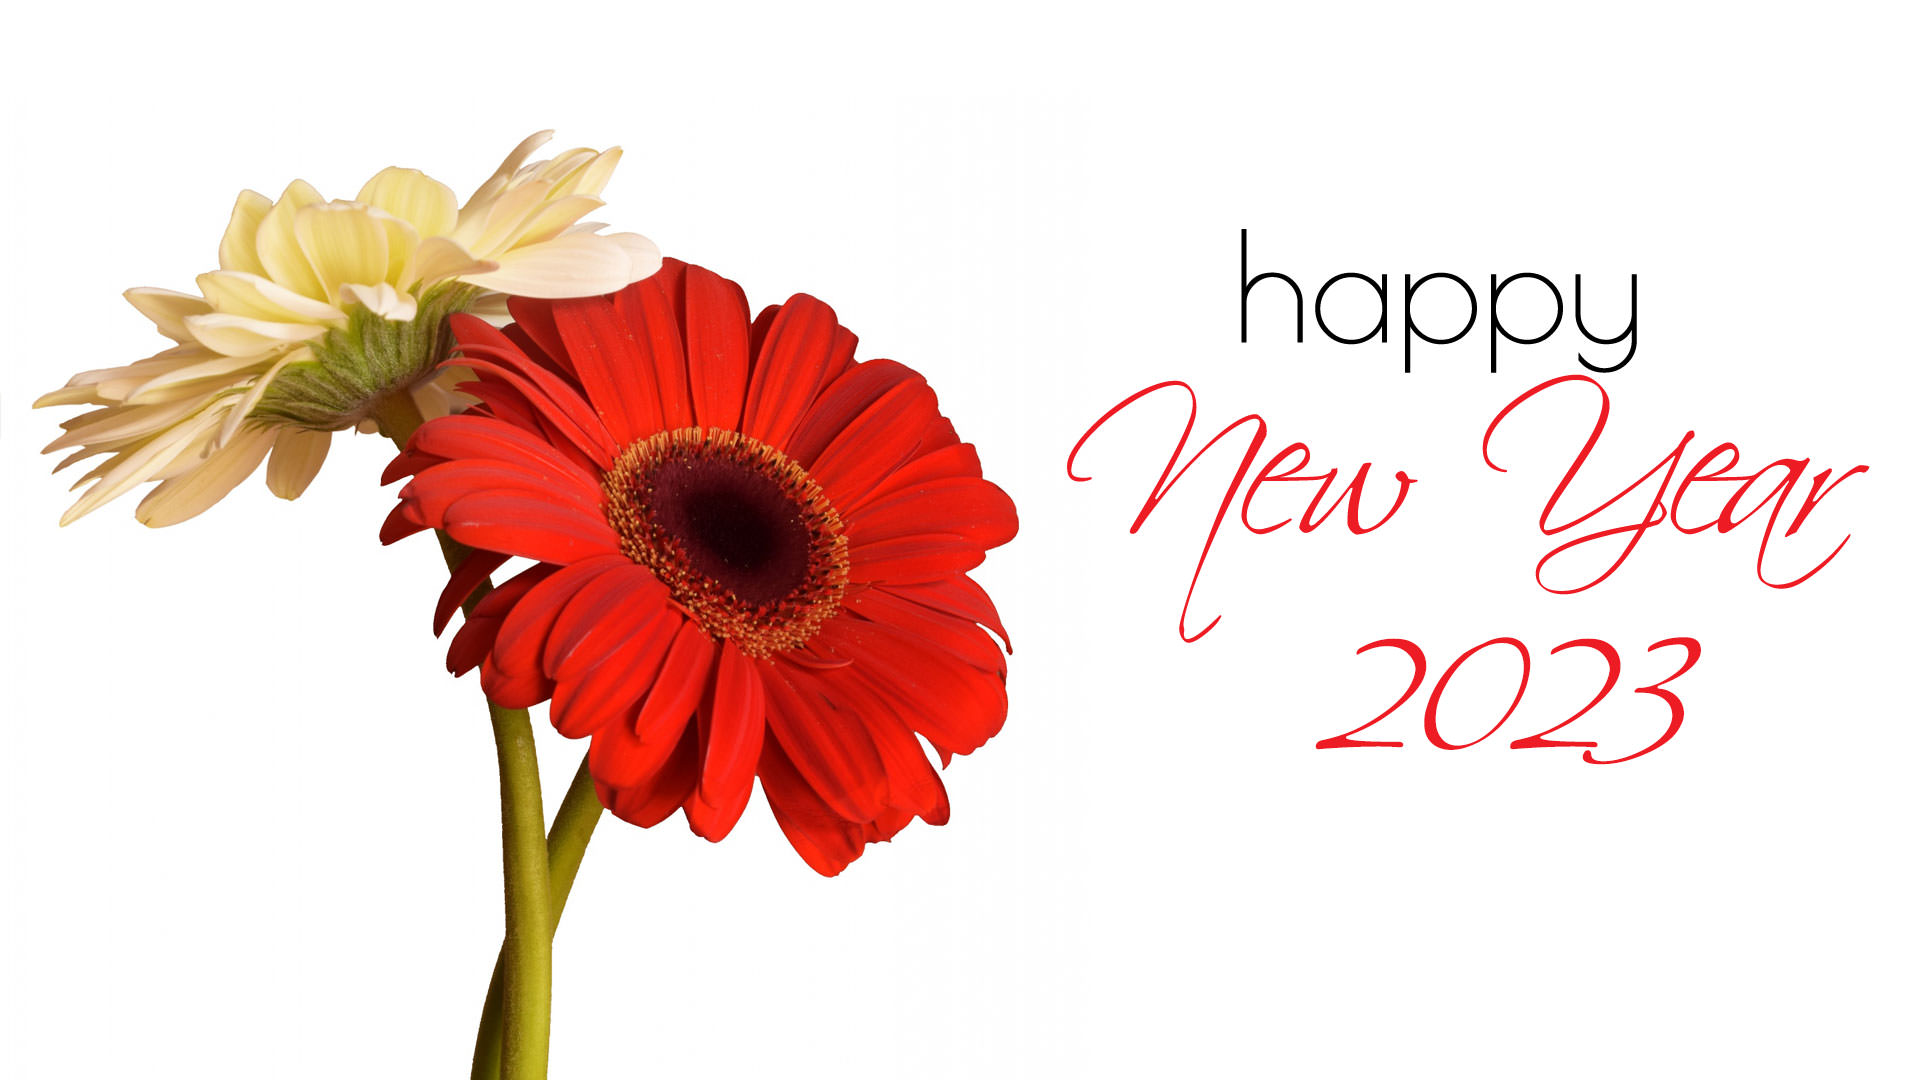 Special Happy New Year 2023 Wallpaper, HD Greetings Desktop Images